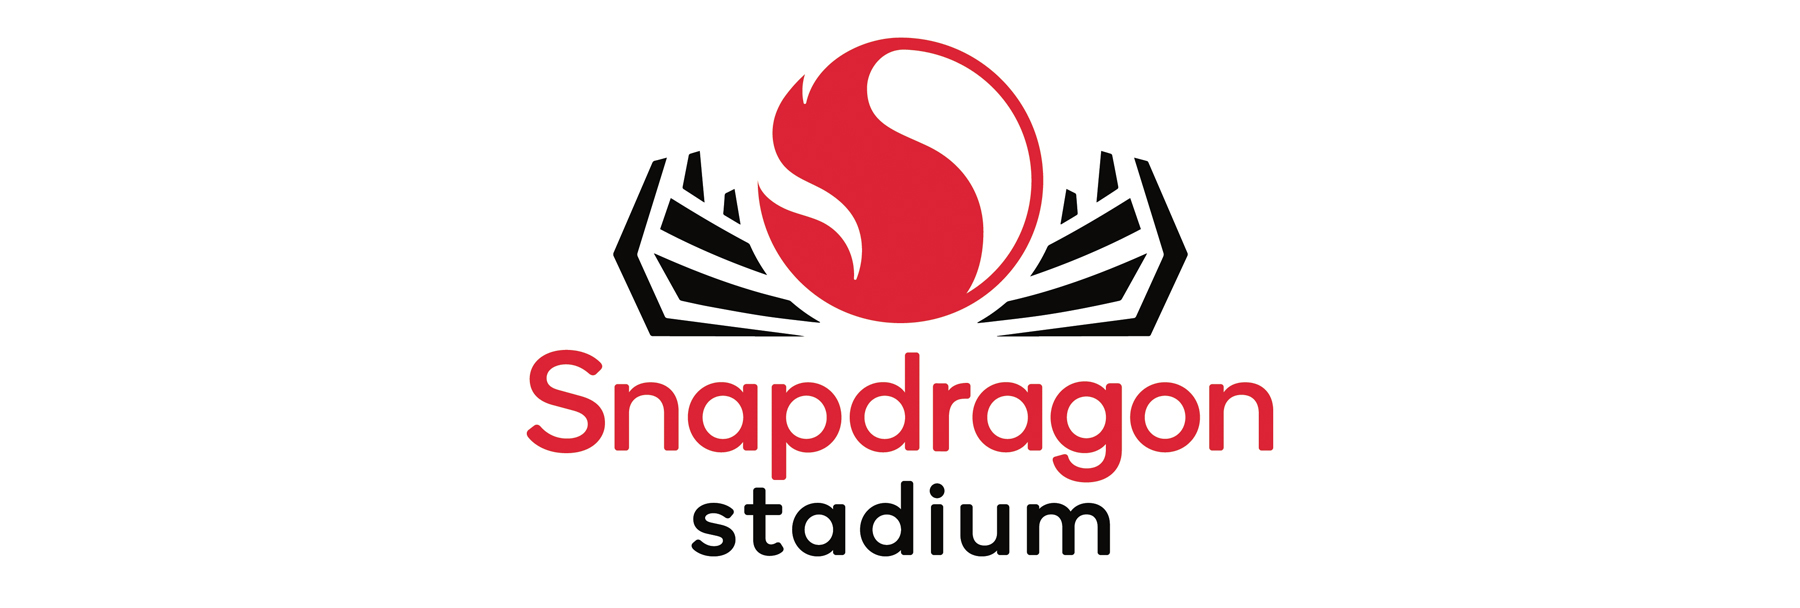 Snapdragon Stadium logo